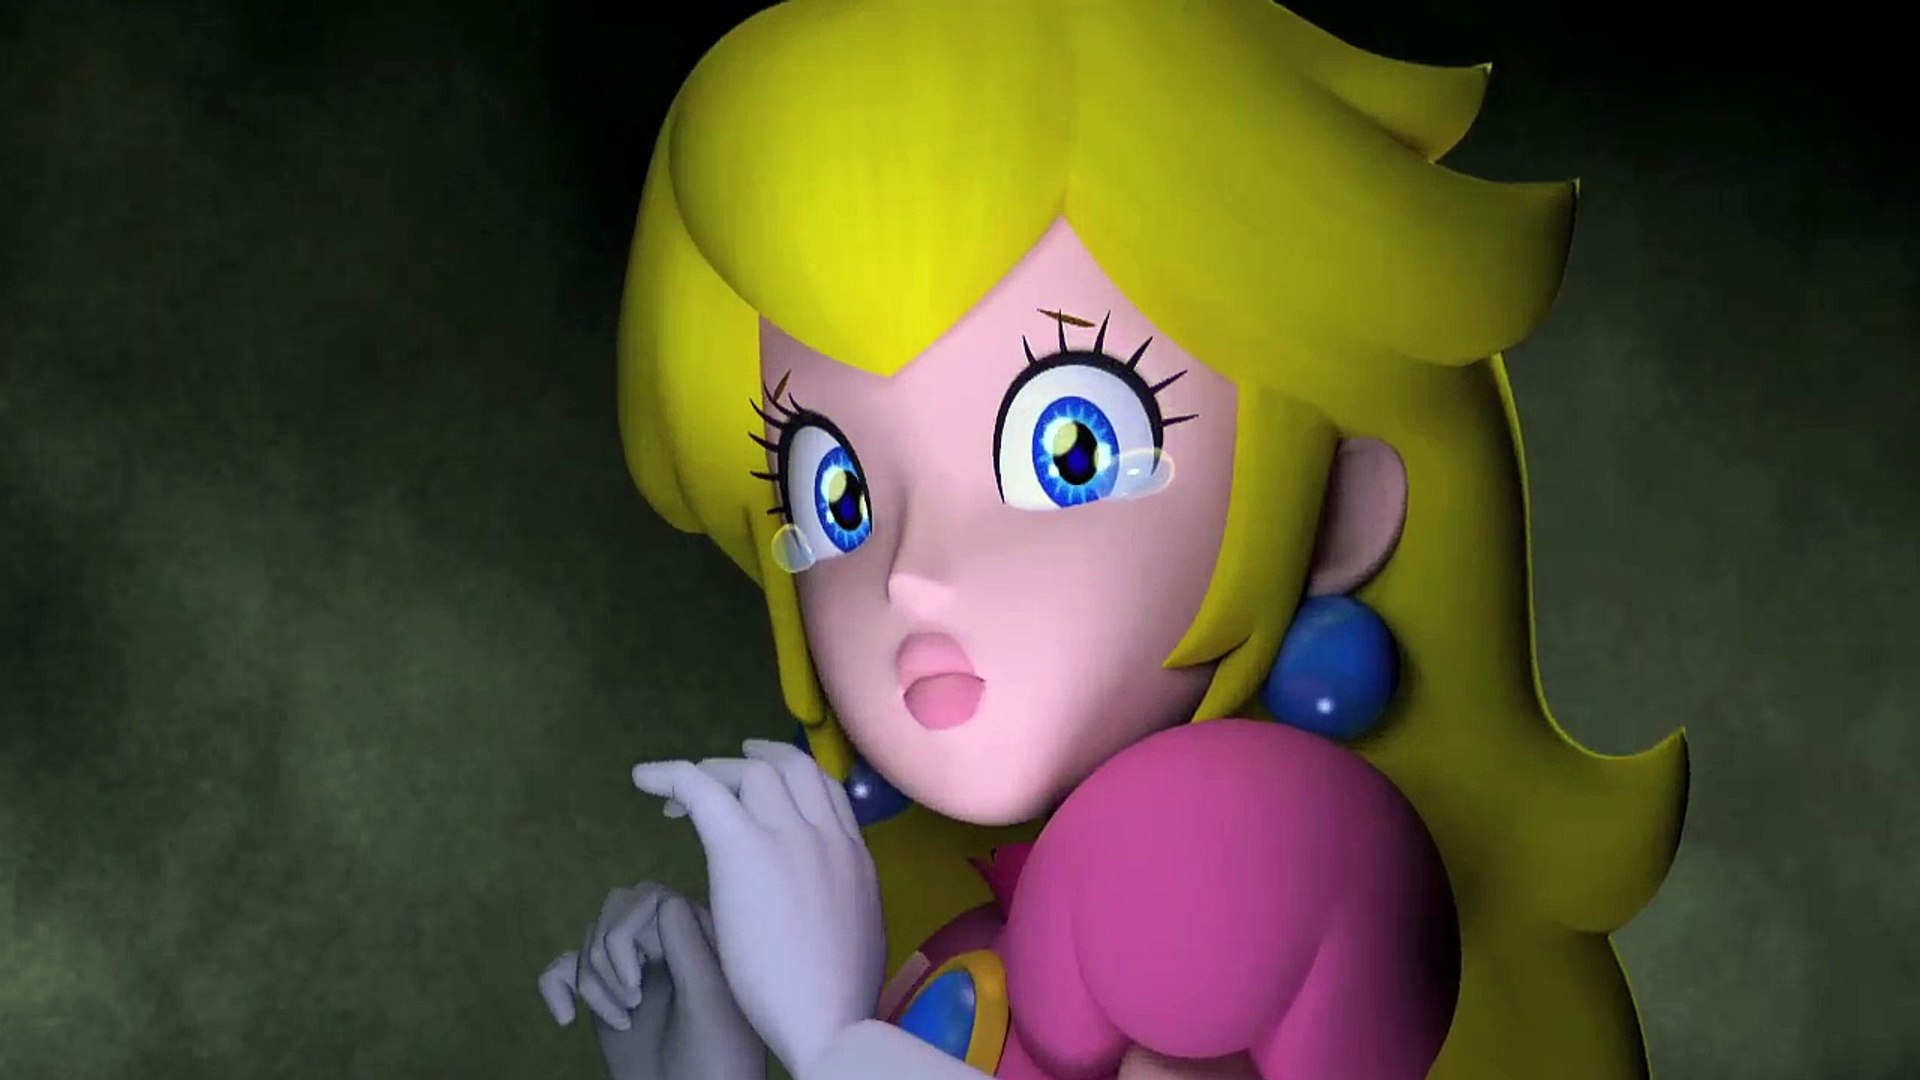 funny luigi fan theories - Darkest Luigi scared princess peach